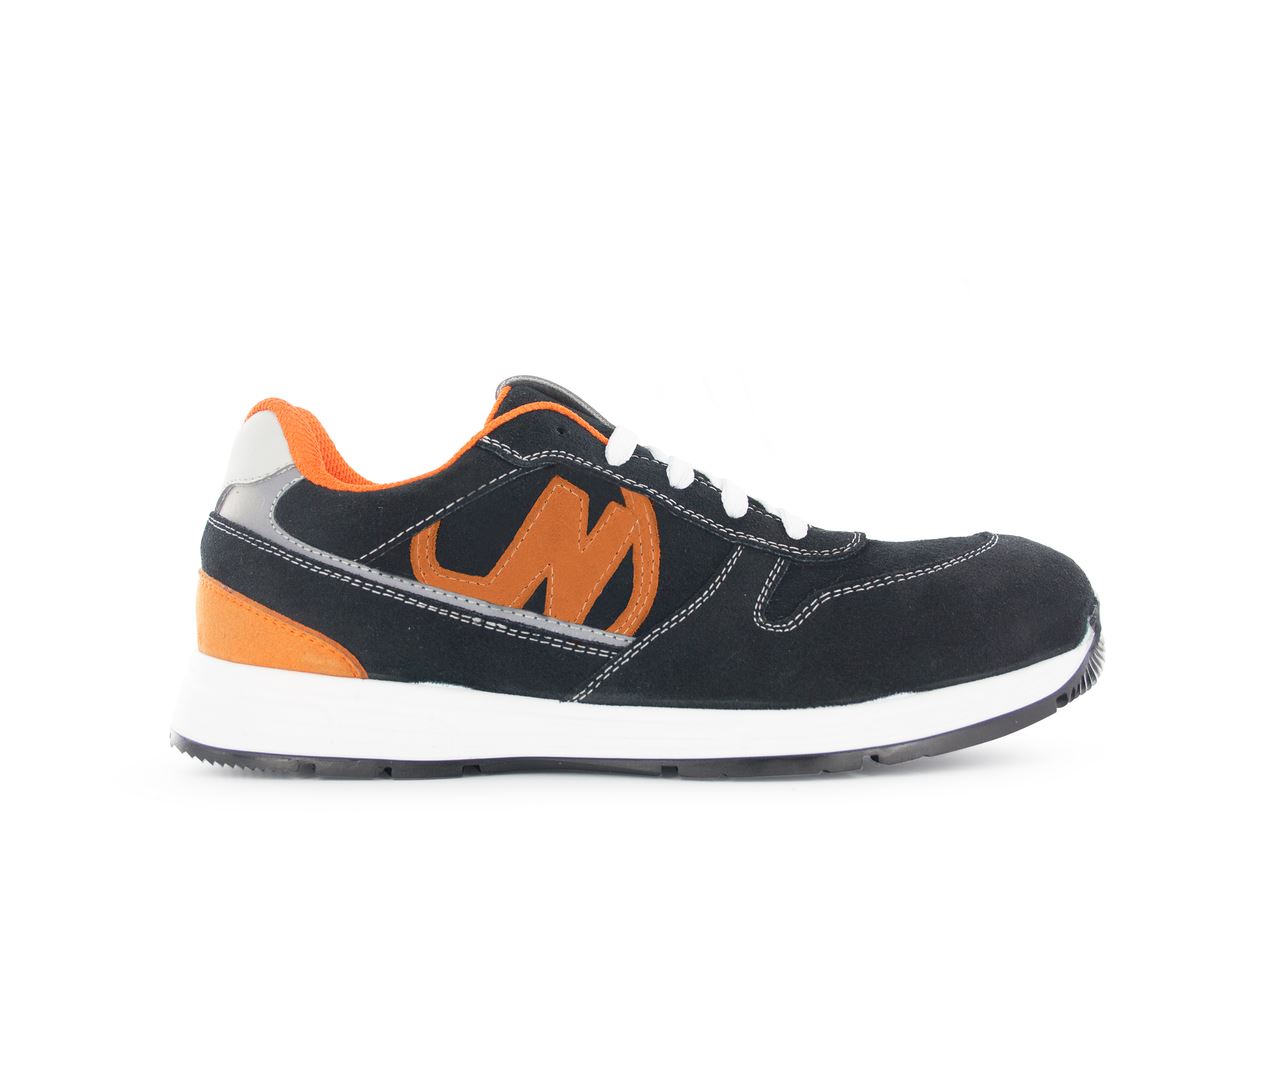 Chaussure de sécurité noir/orange Run Soft T.40 - Nord'Ways - RUN000340000NOOR